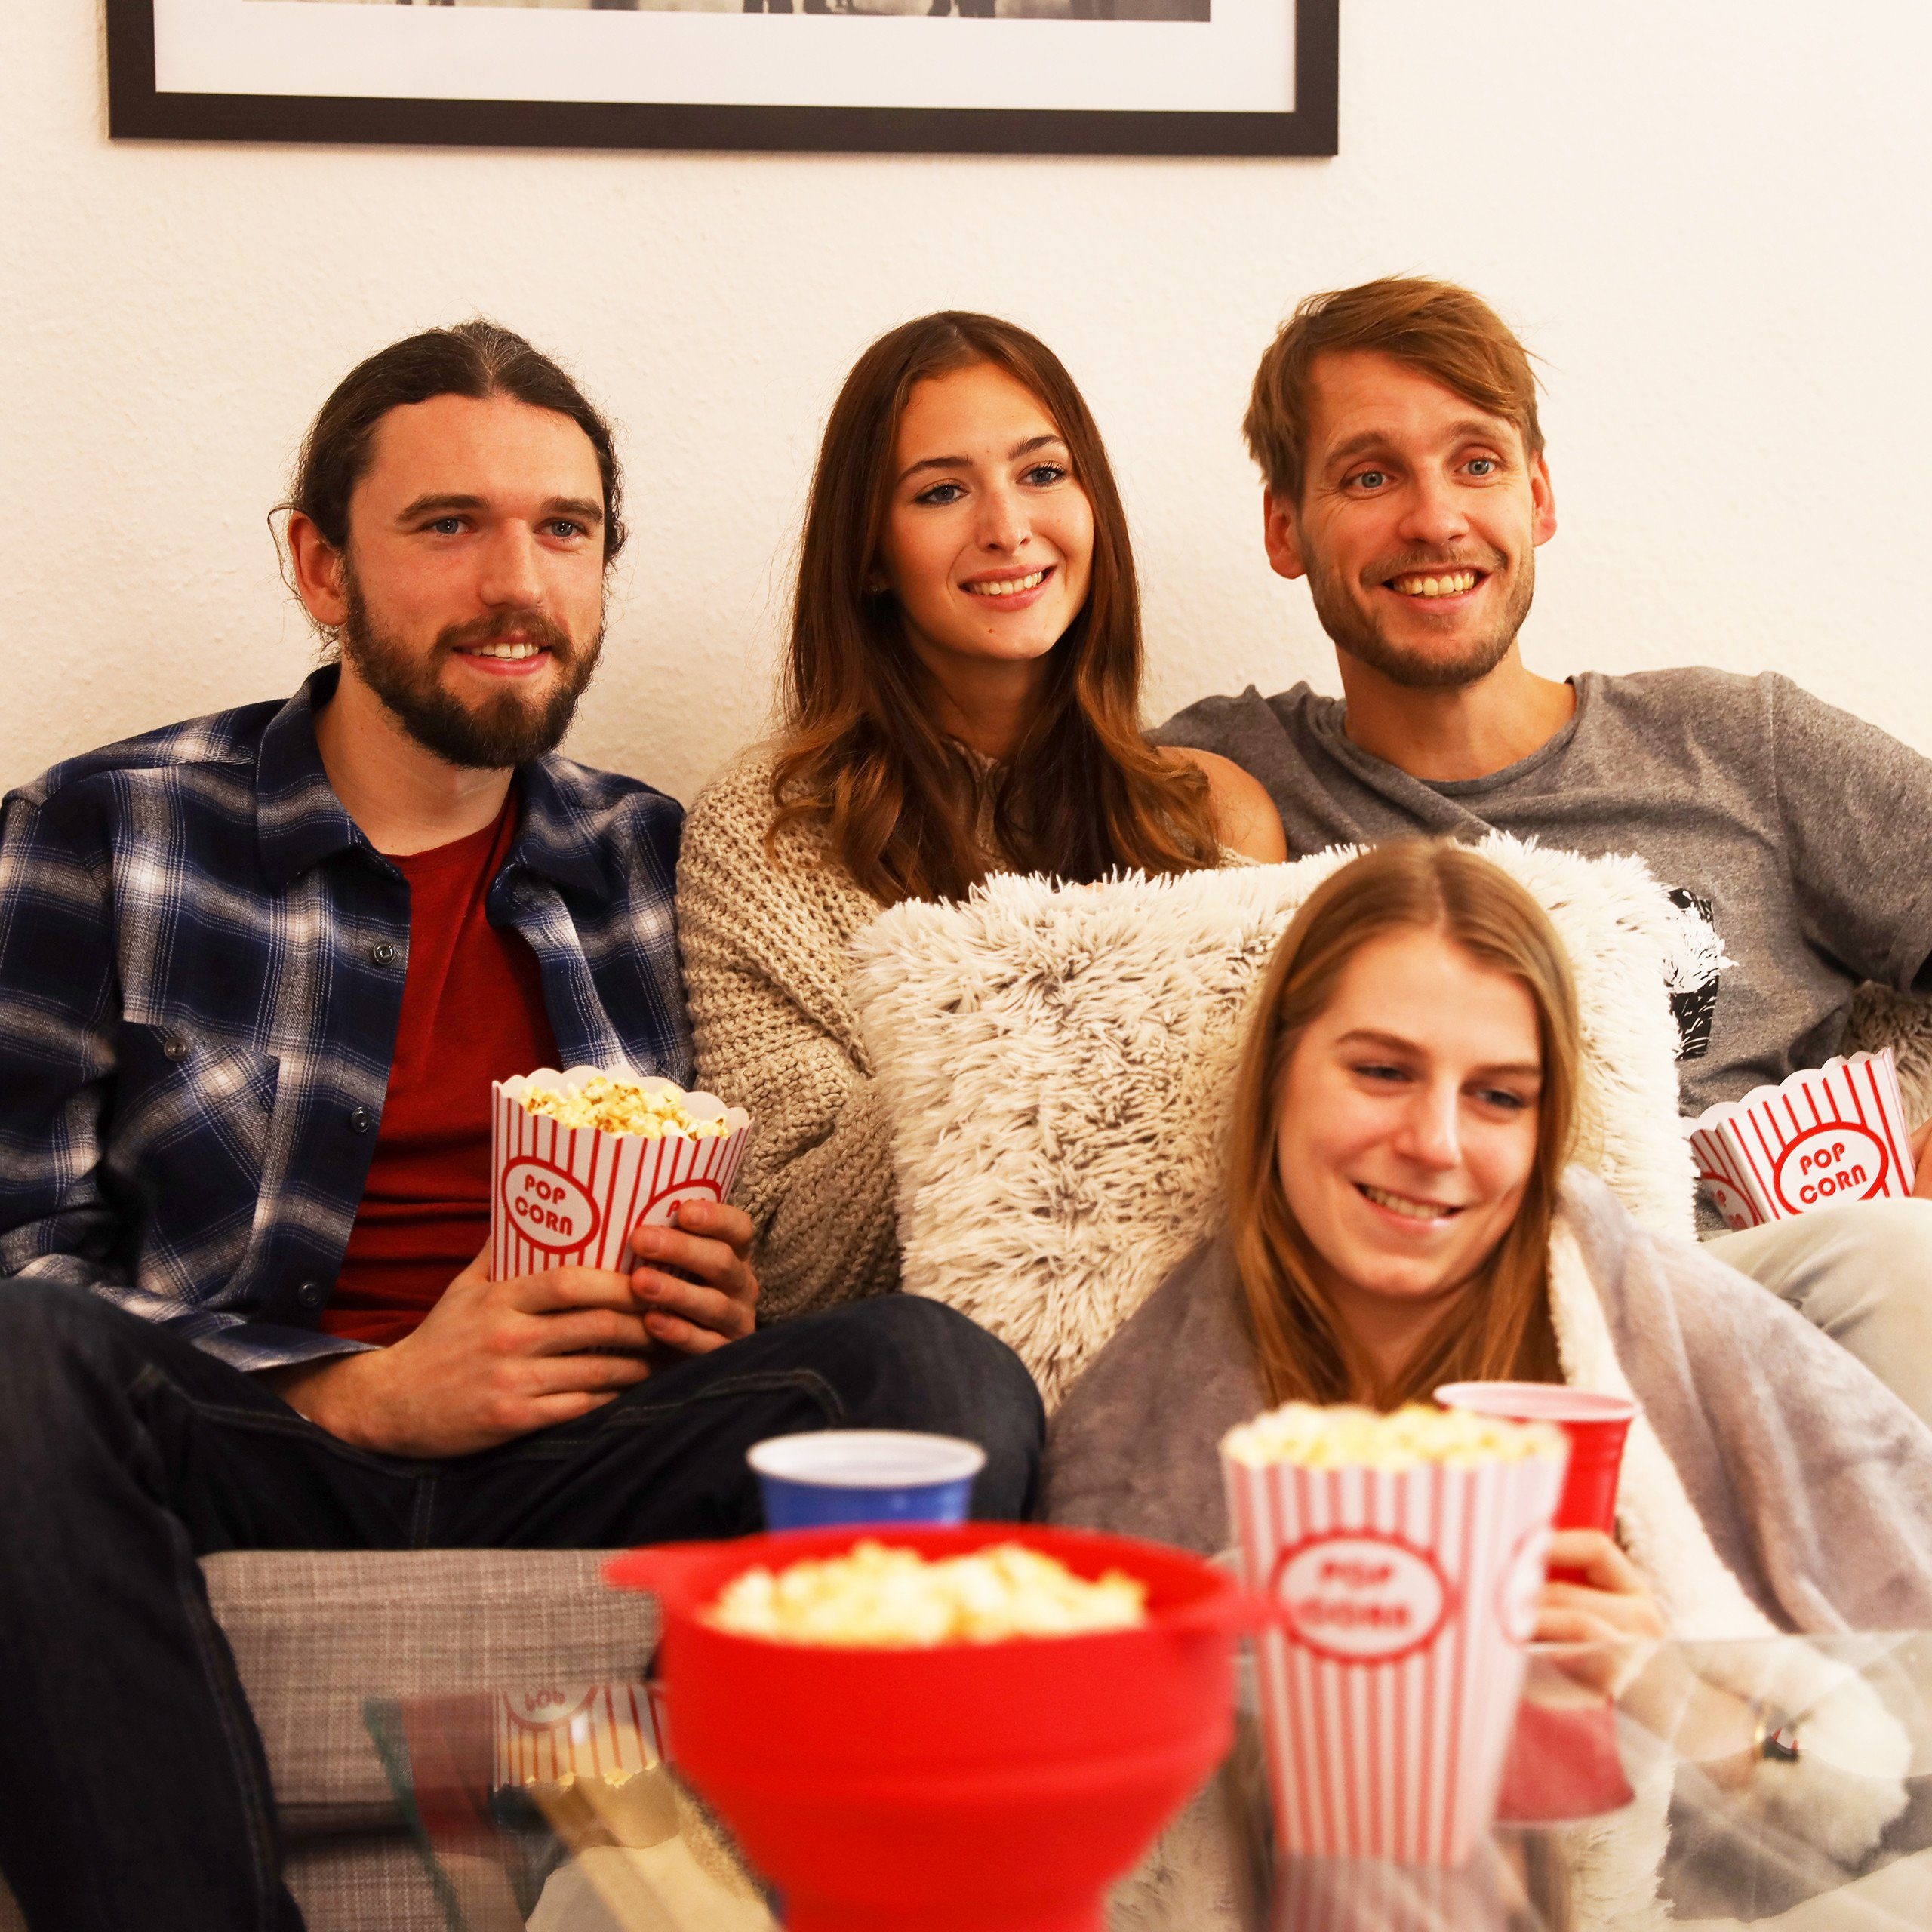 relaxdays Popcorn-Pfanne Popcorn Silikon rot x Mikrowelle 1 Maker